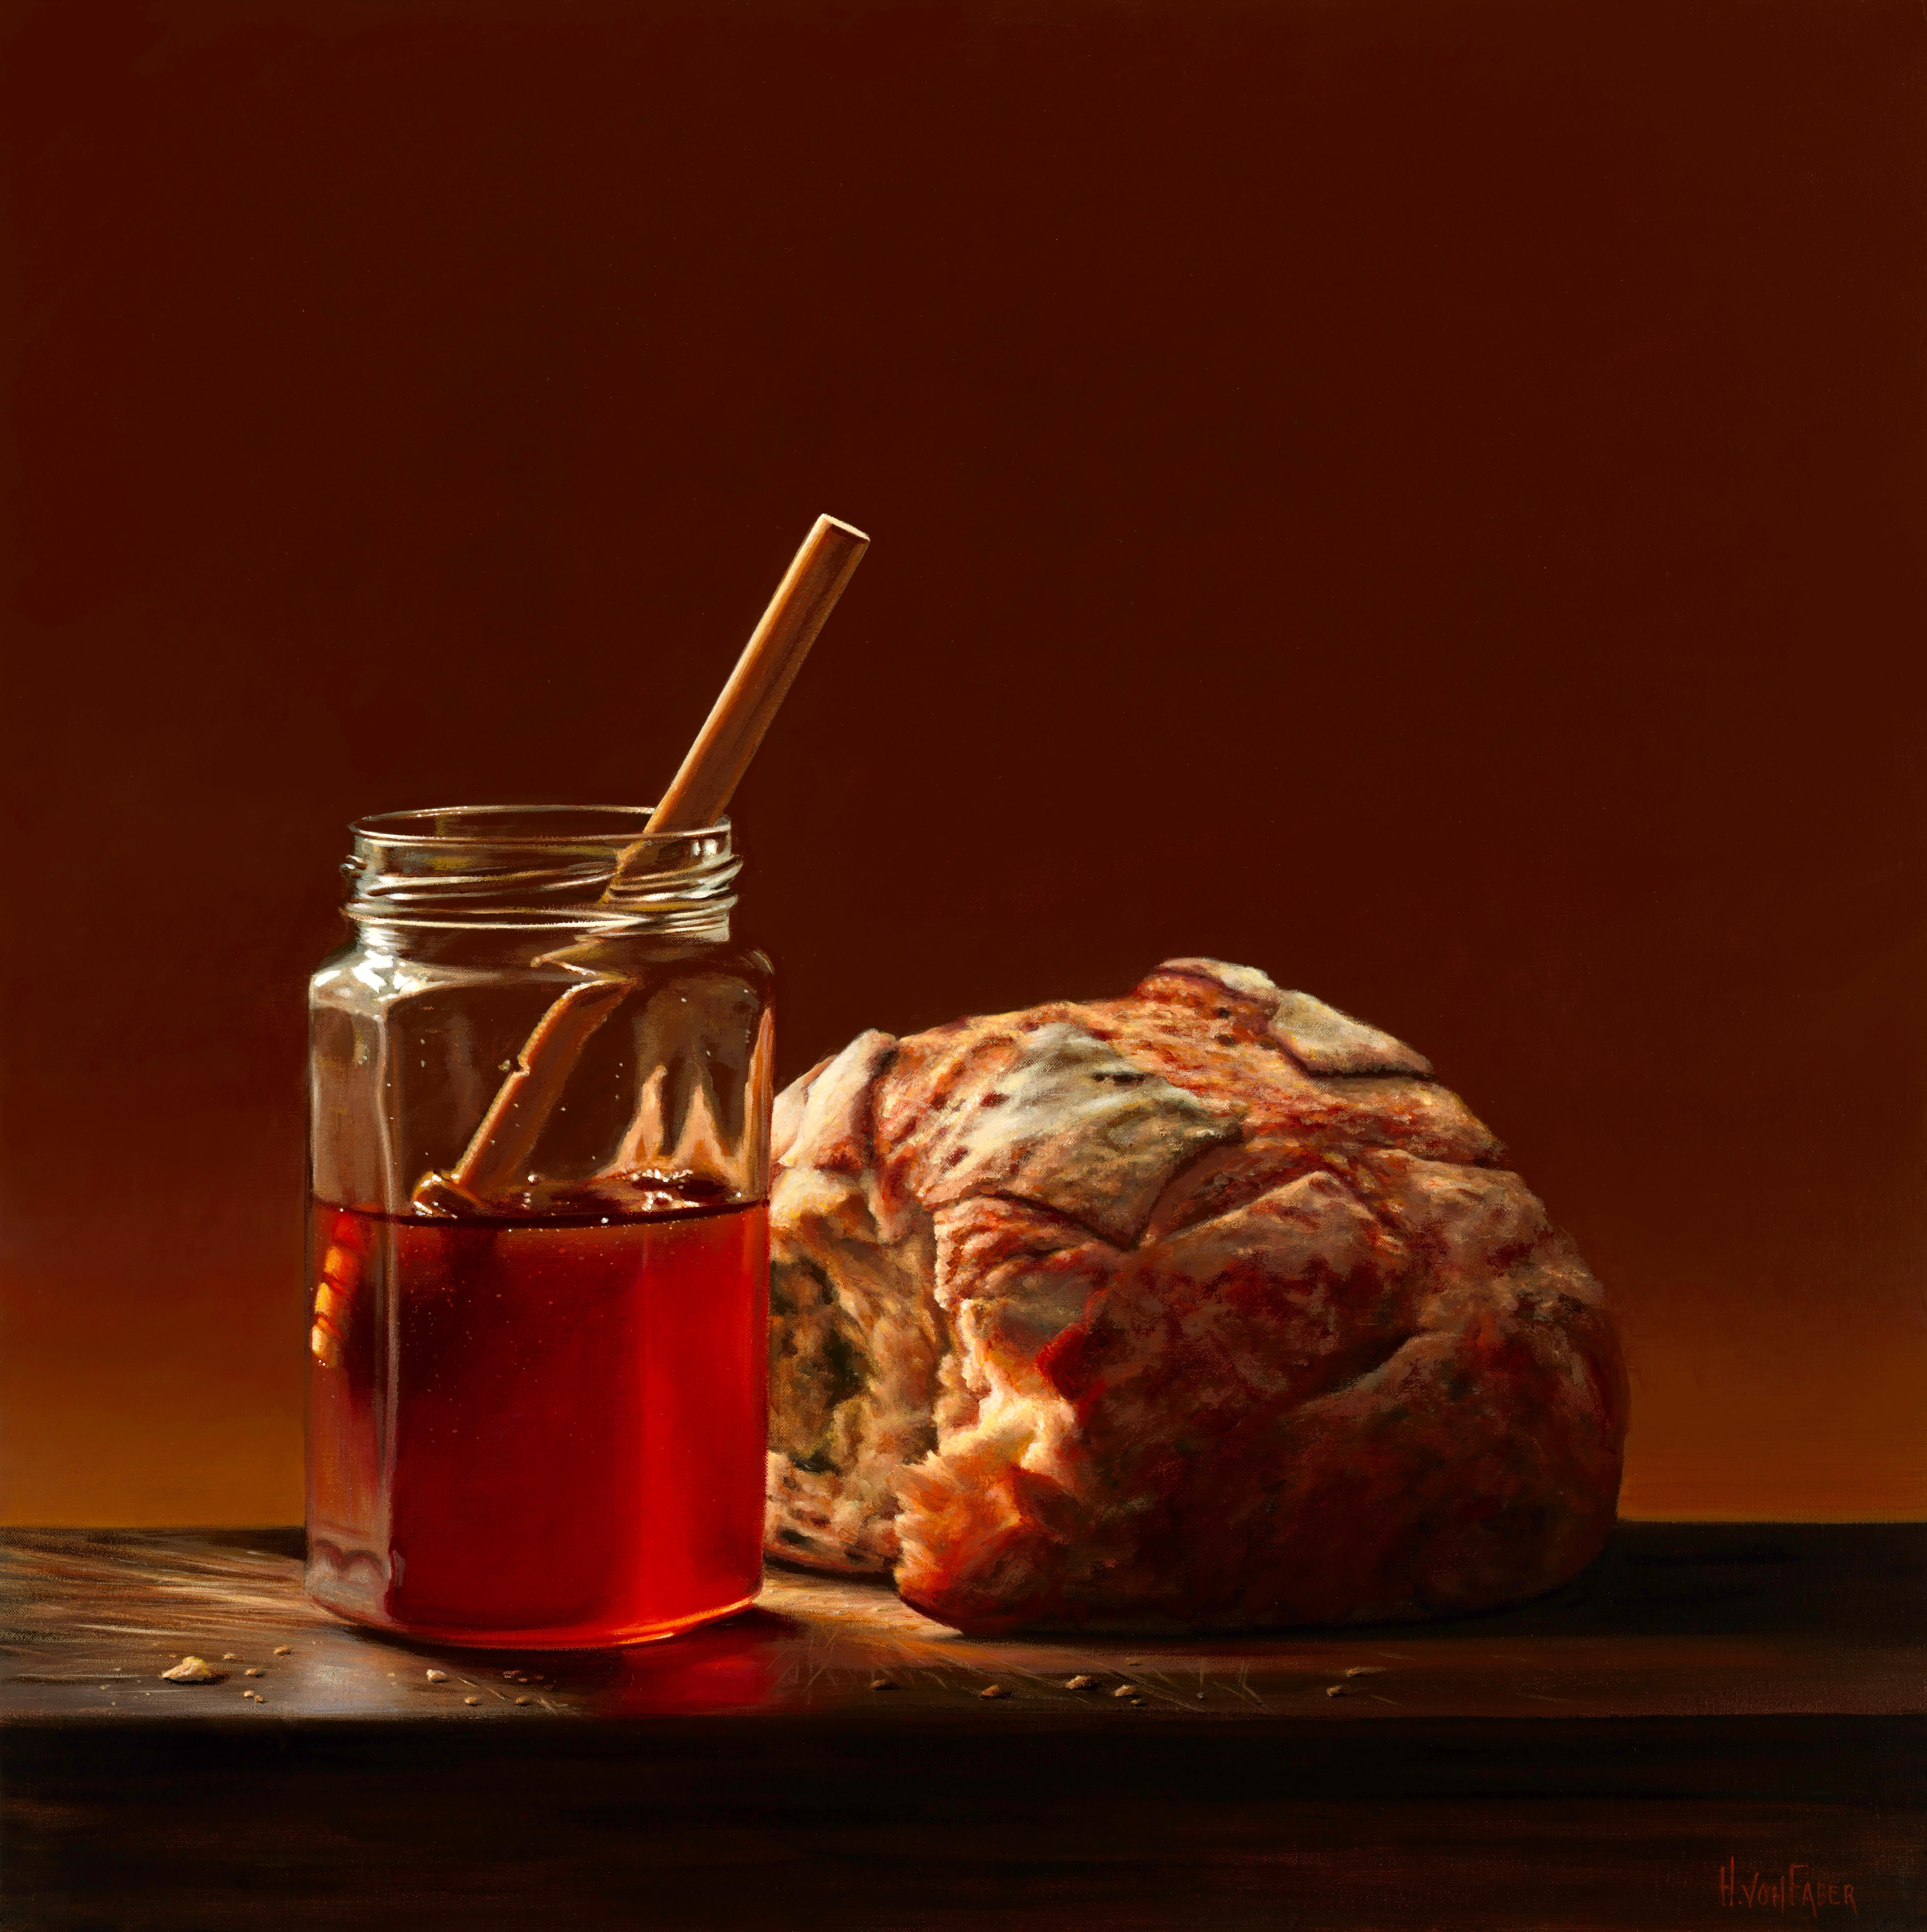 Heidi von Faber Figurative Painting - Honey and Bread - 21st Century Dutch Still-life painting